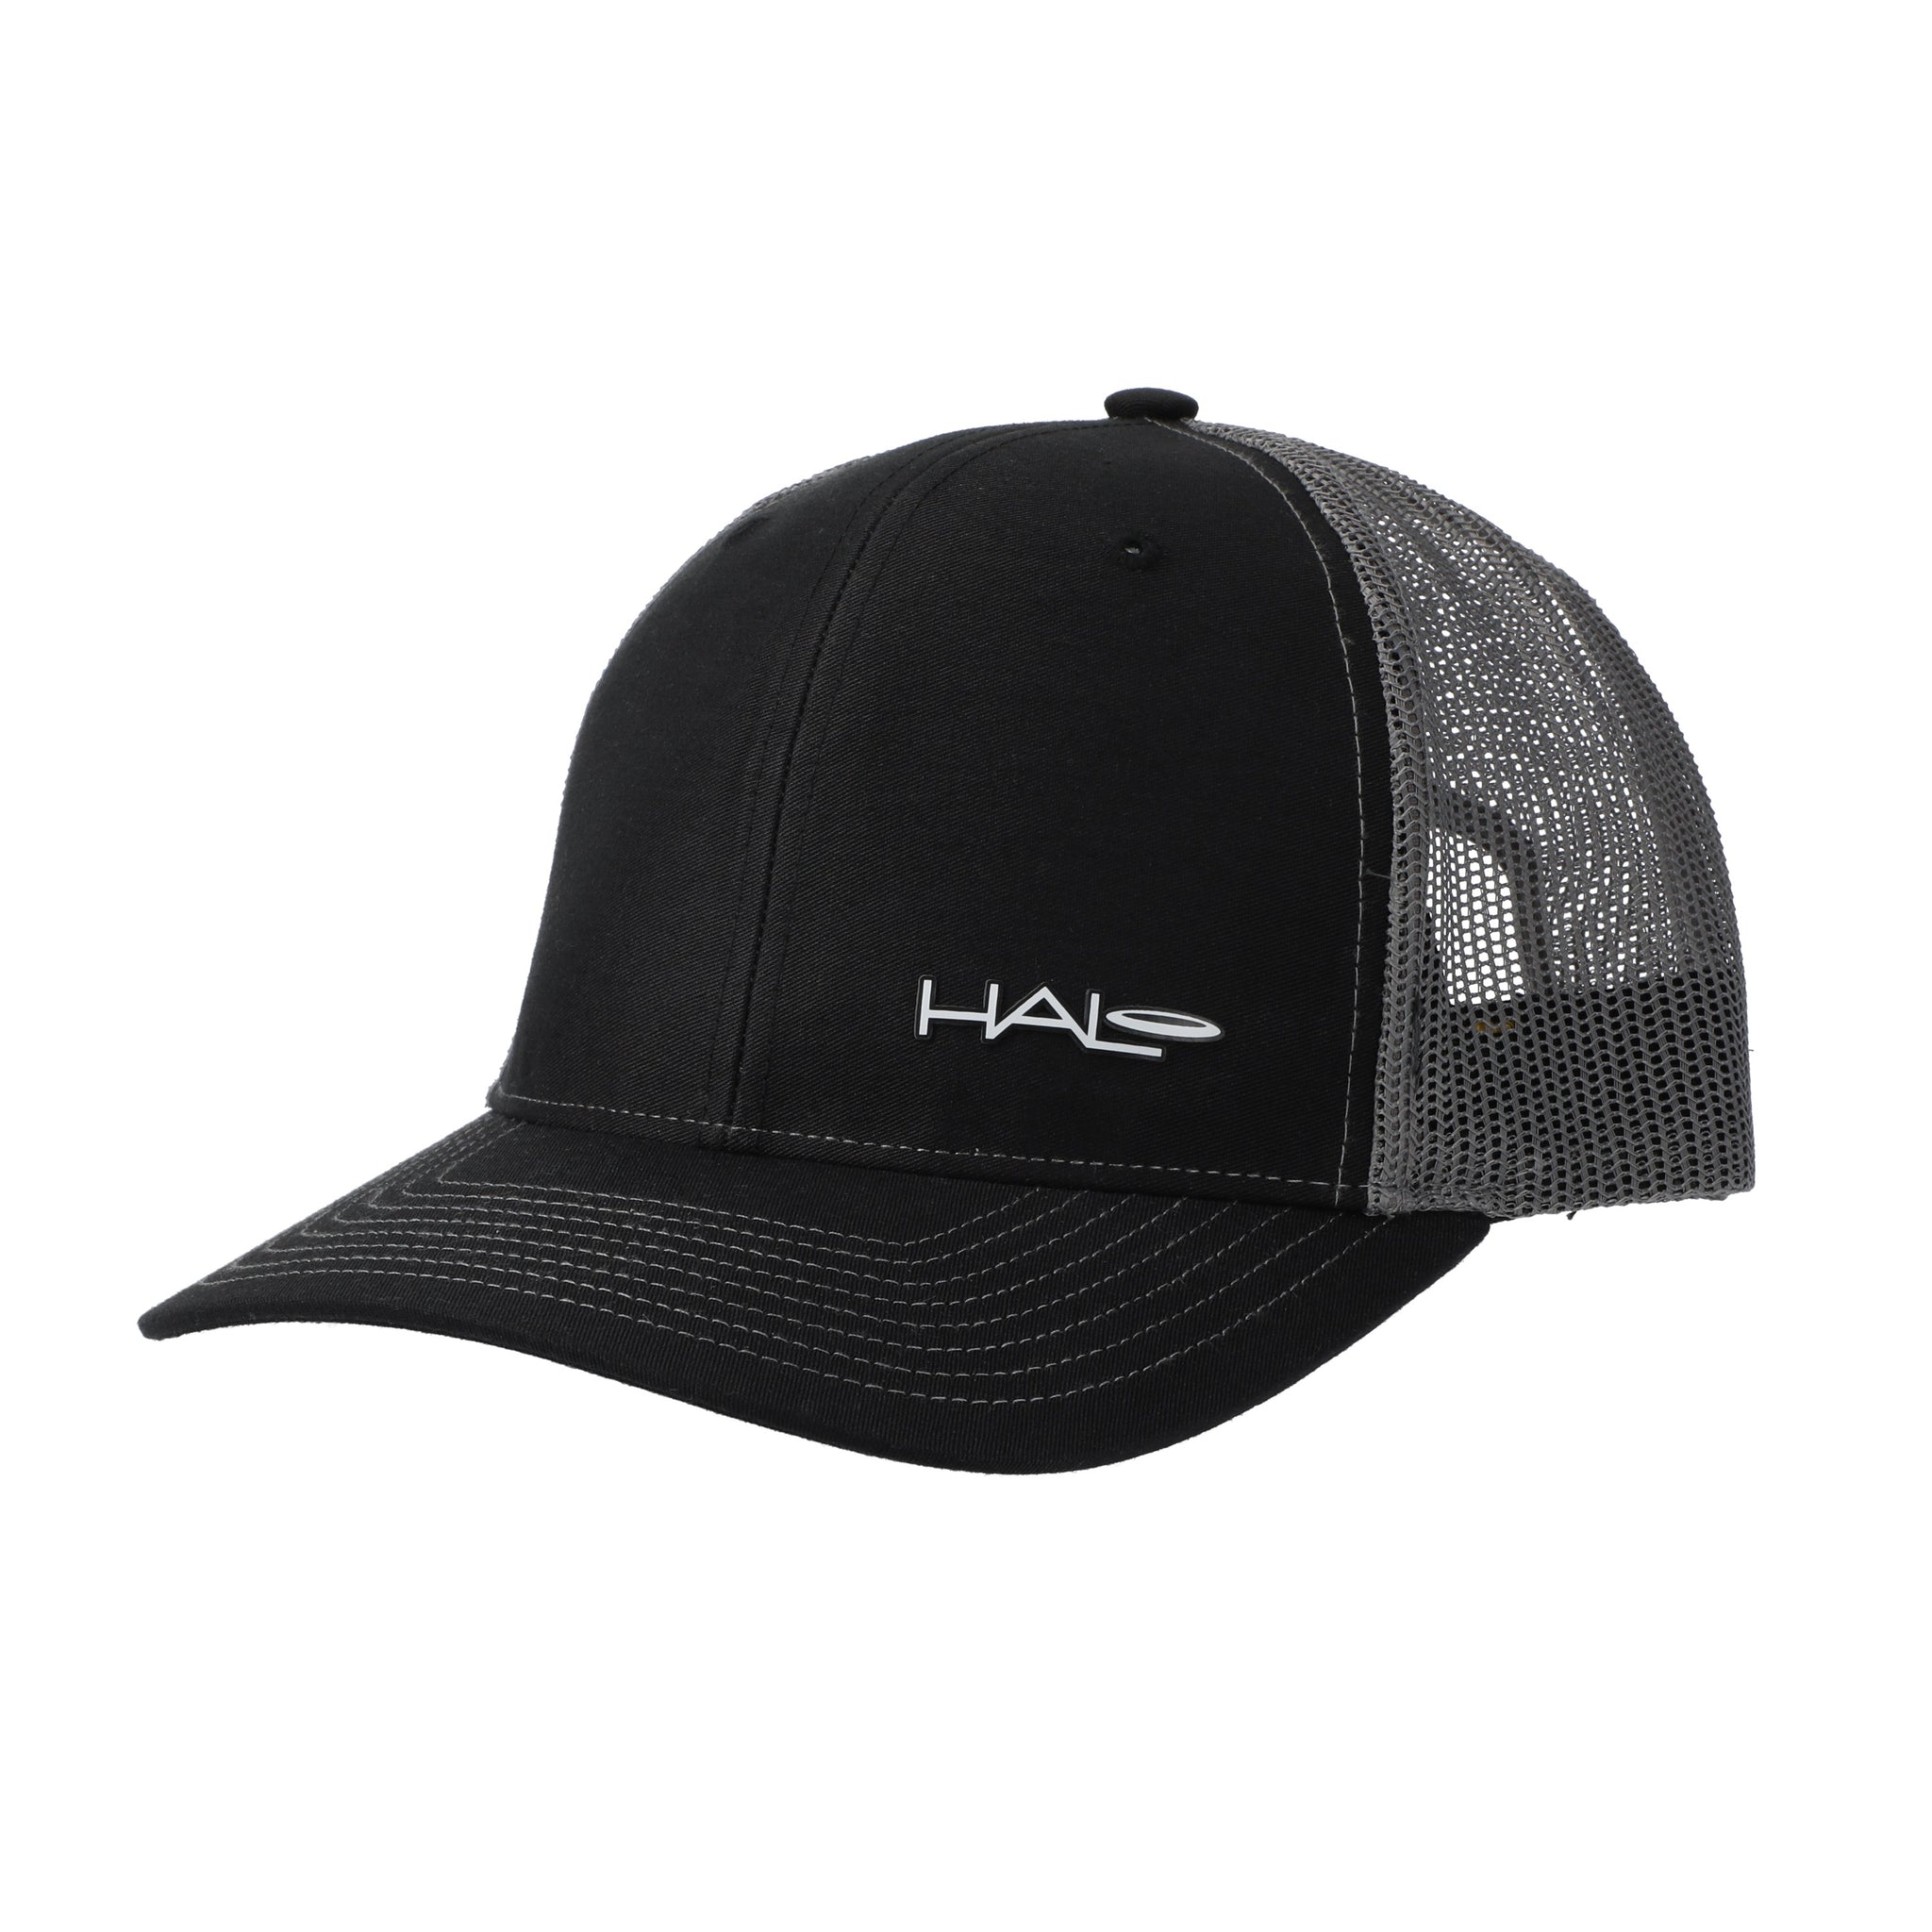 Halo ヘッドバンドを内蔵したトラッカーハットです。 – HALO headband